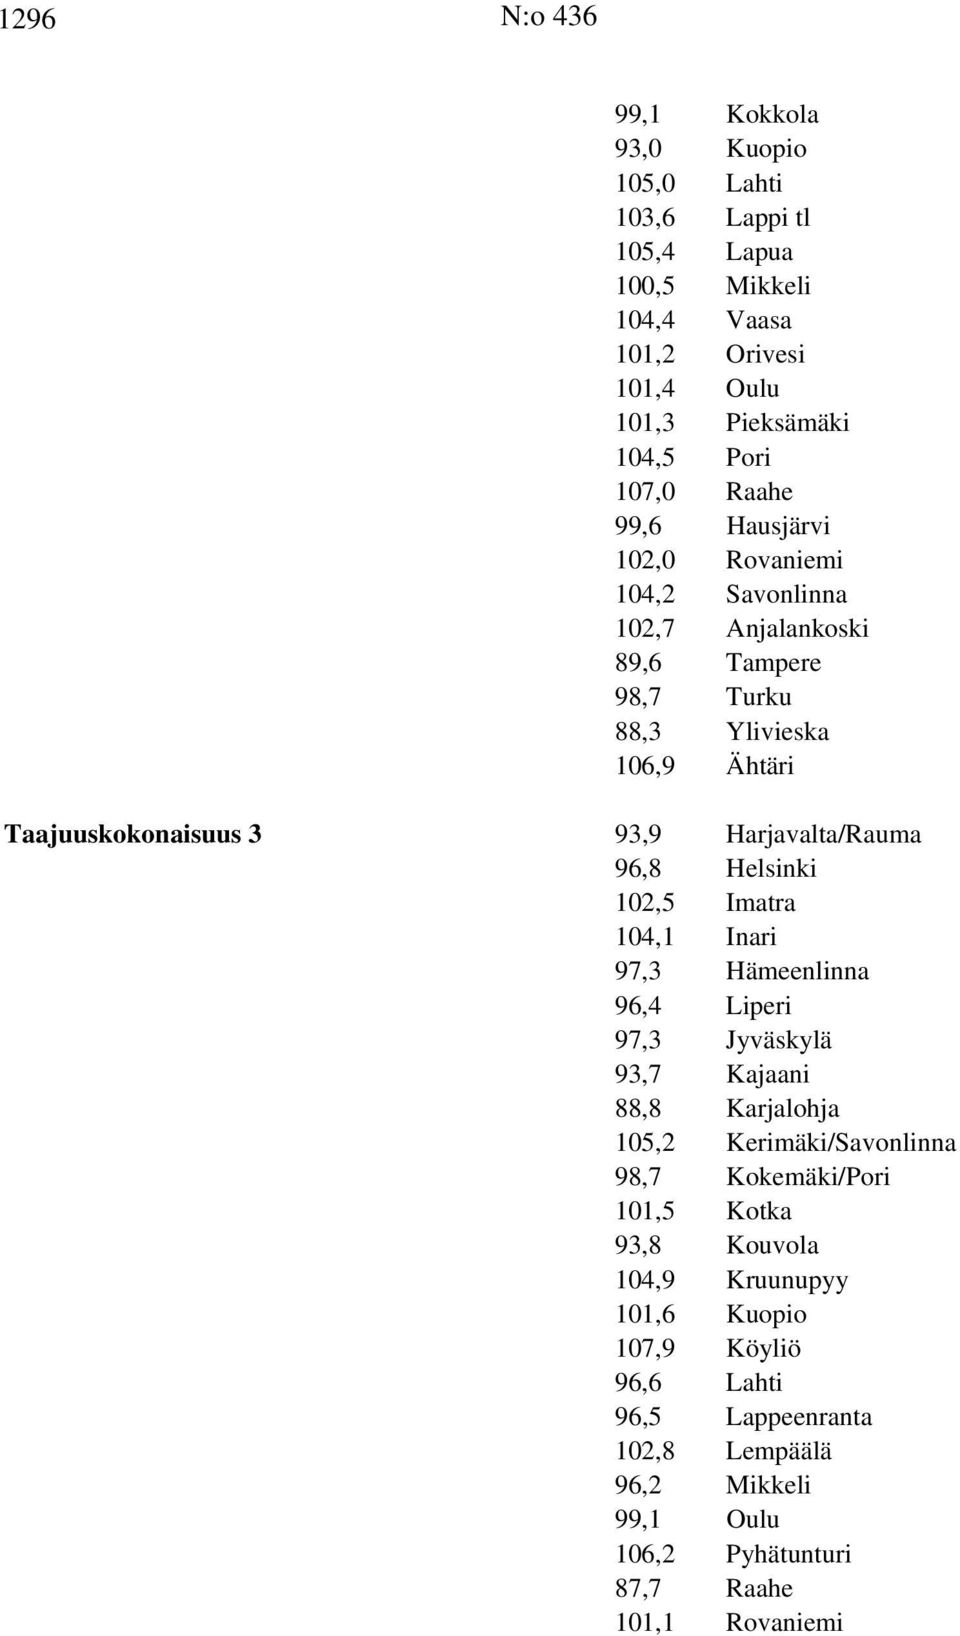 Harjavalta/Rauma 96,8 Helsinki 102,5 Imatra 104,1 Inari 97,3 Hämeenlinna 96,4 Liperi 97,3 Jyväskylä 93,7 Kajaani 88,8 Karjalohja 105,2 Kerimäki/Savonlinna 98,7